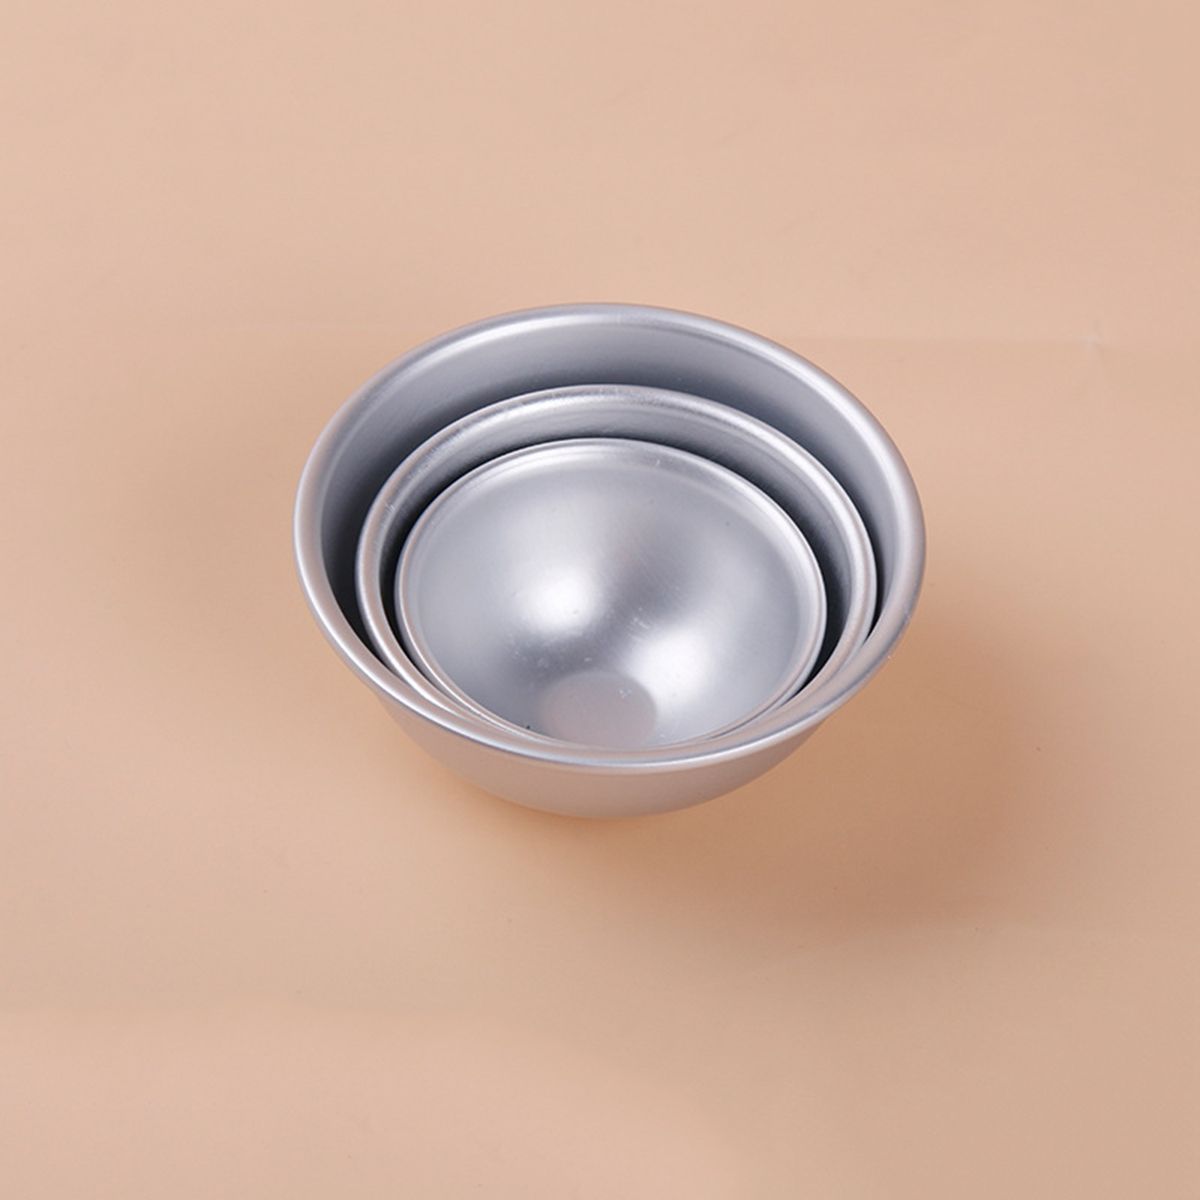 16Pcs-DIY-Soap-Mold-Sphere-Metal-Bath-Fizzy-Craft-Cake-Candle-Moulds-1706844